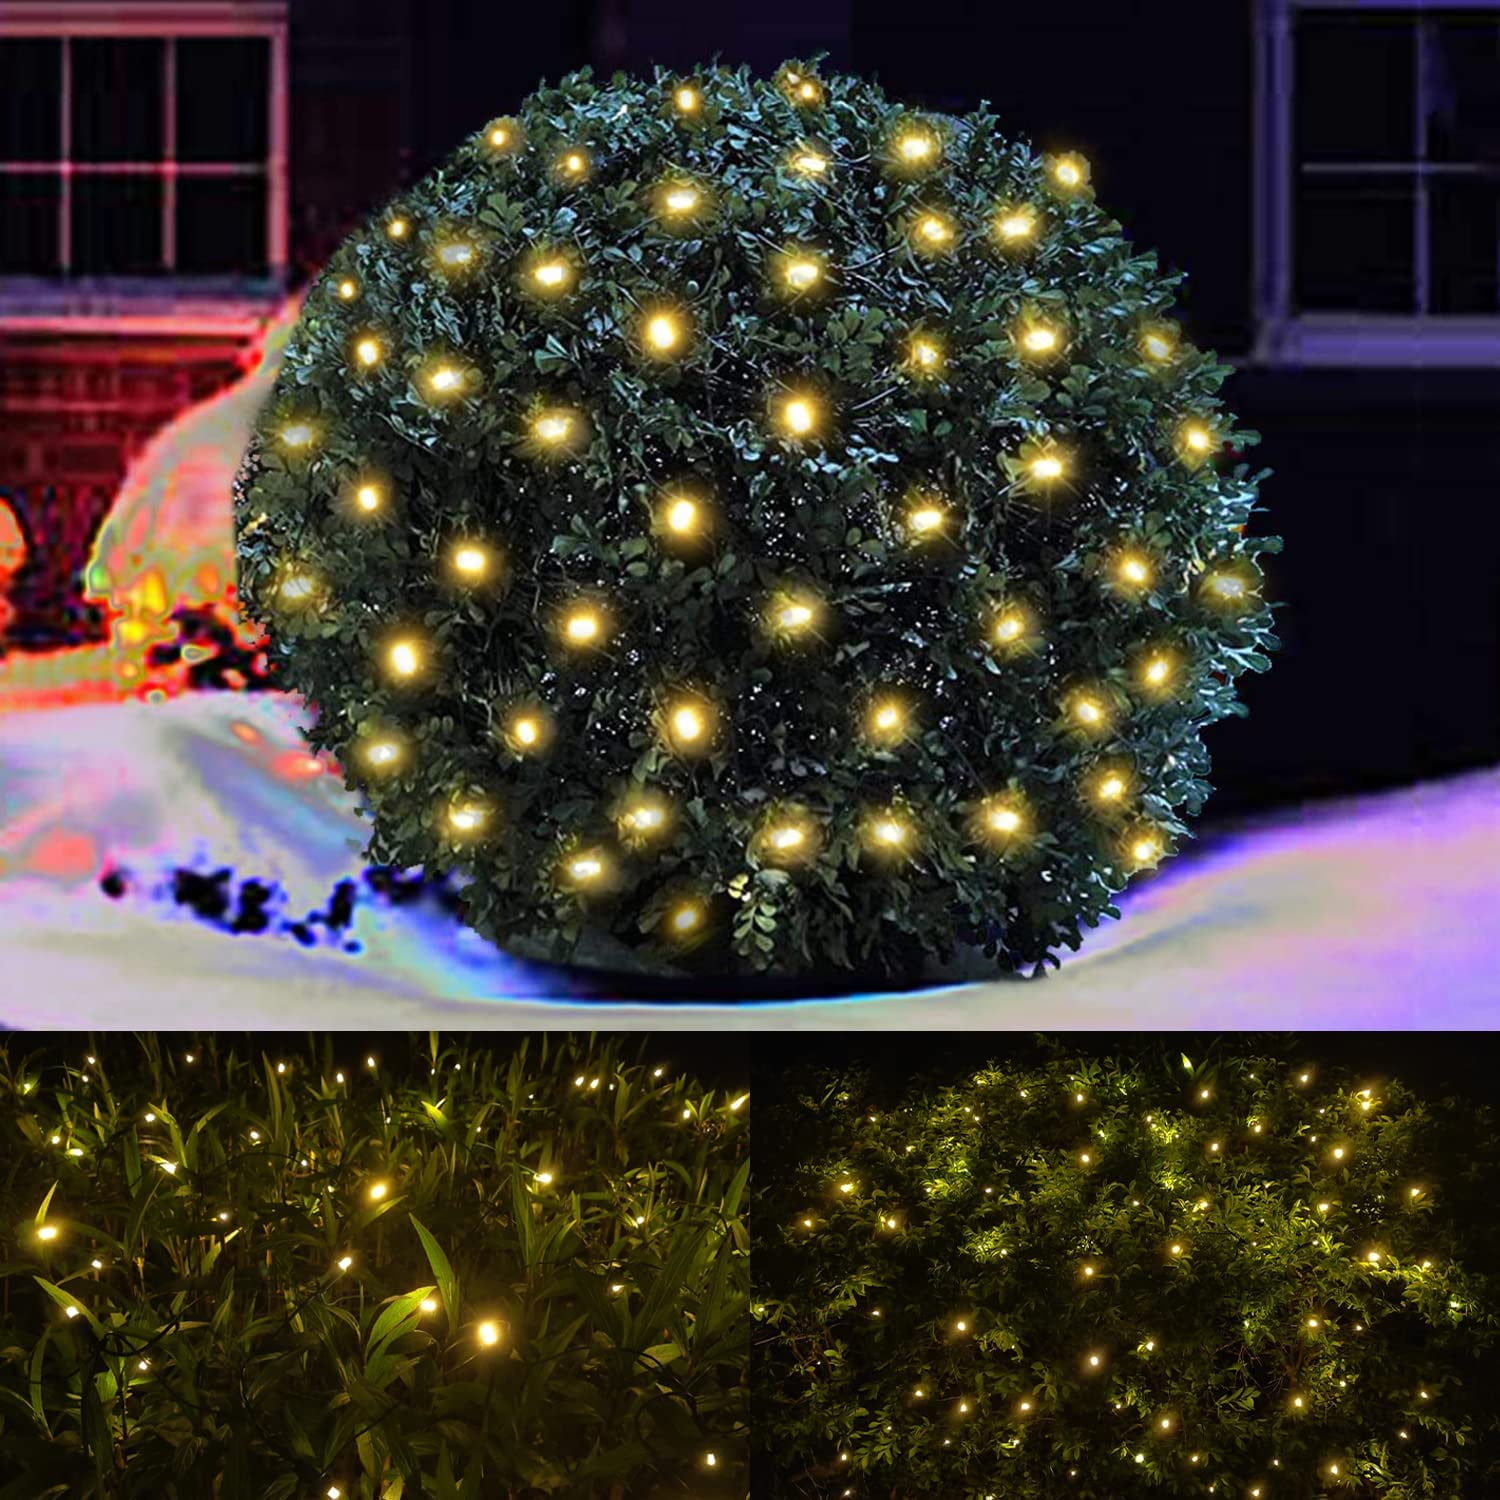 Star Lighting Strings Solar Light Fishing Net Lights Waterproof Outdoor  Christmas Lights Decor Bushes Garden Party Xmas Tree